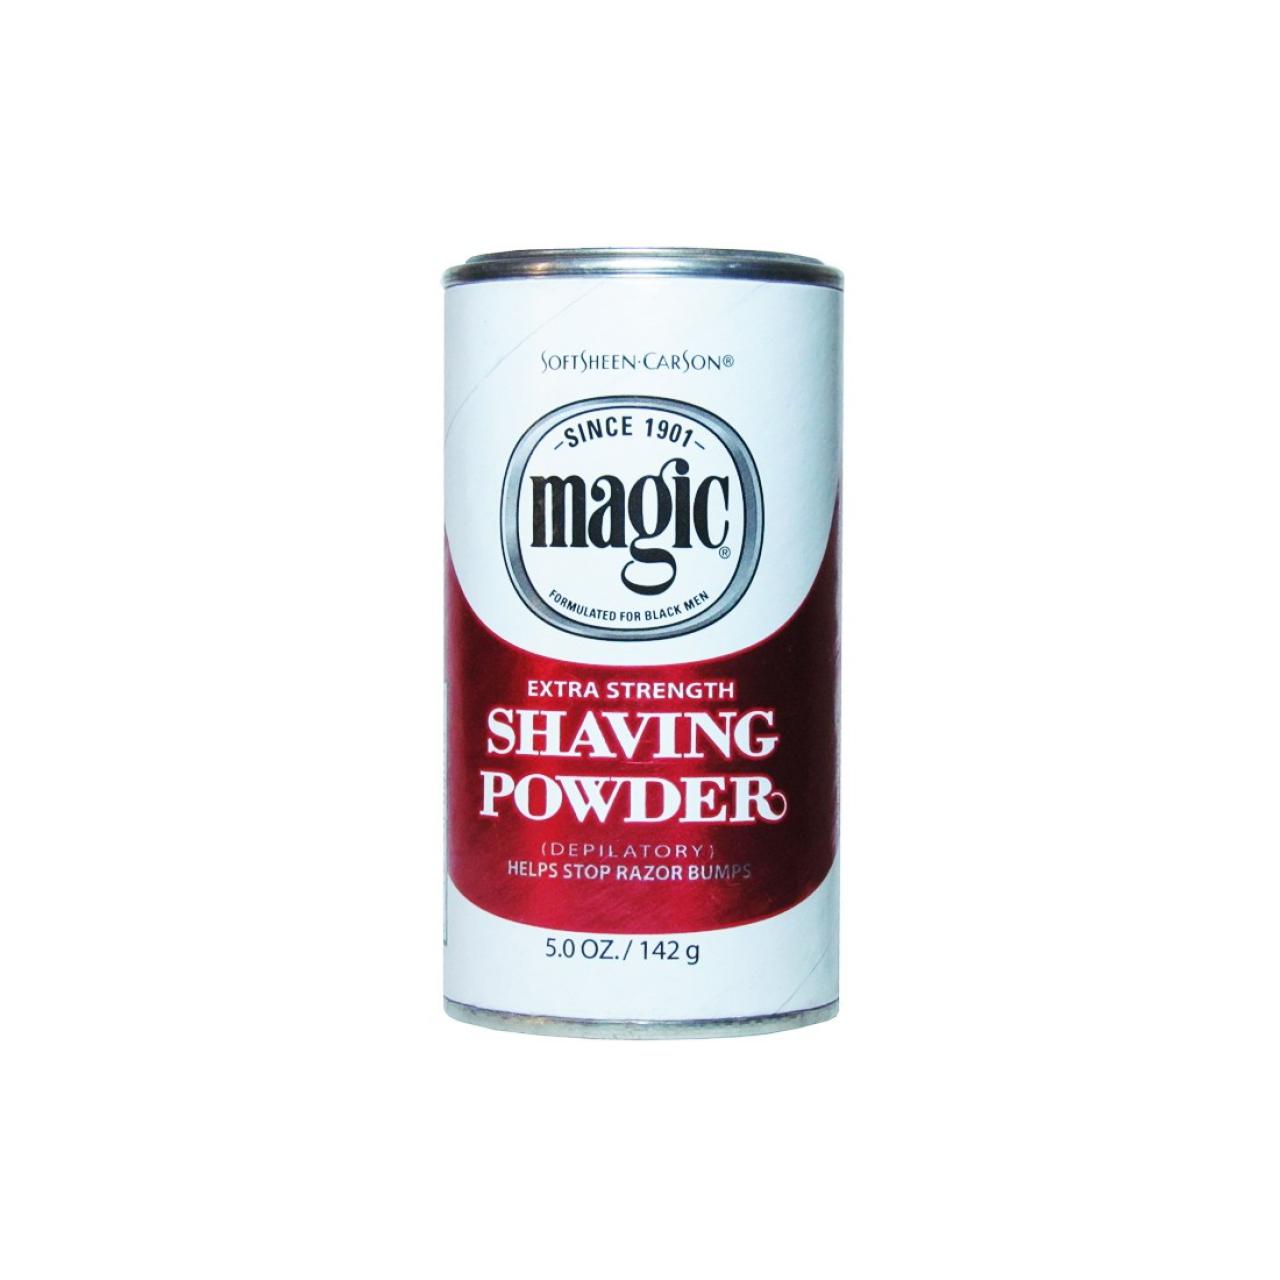 Magic shaving powder